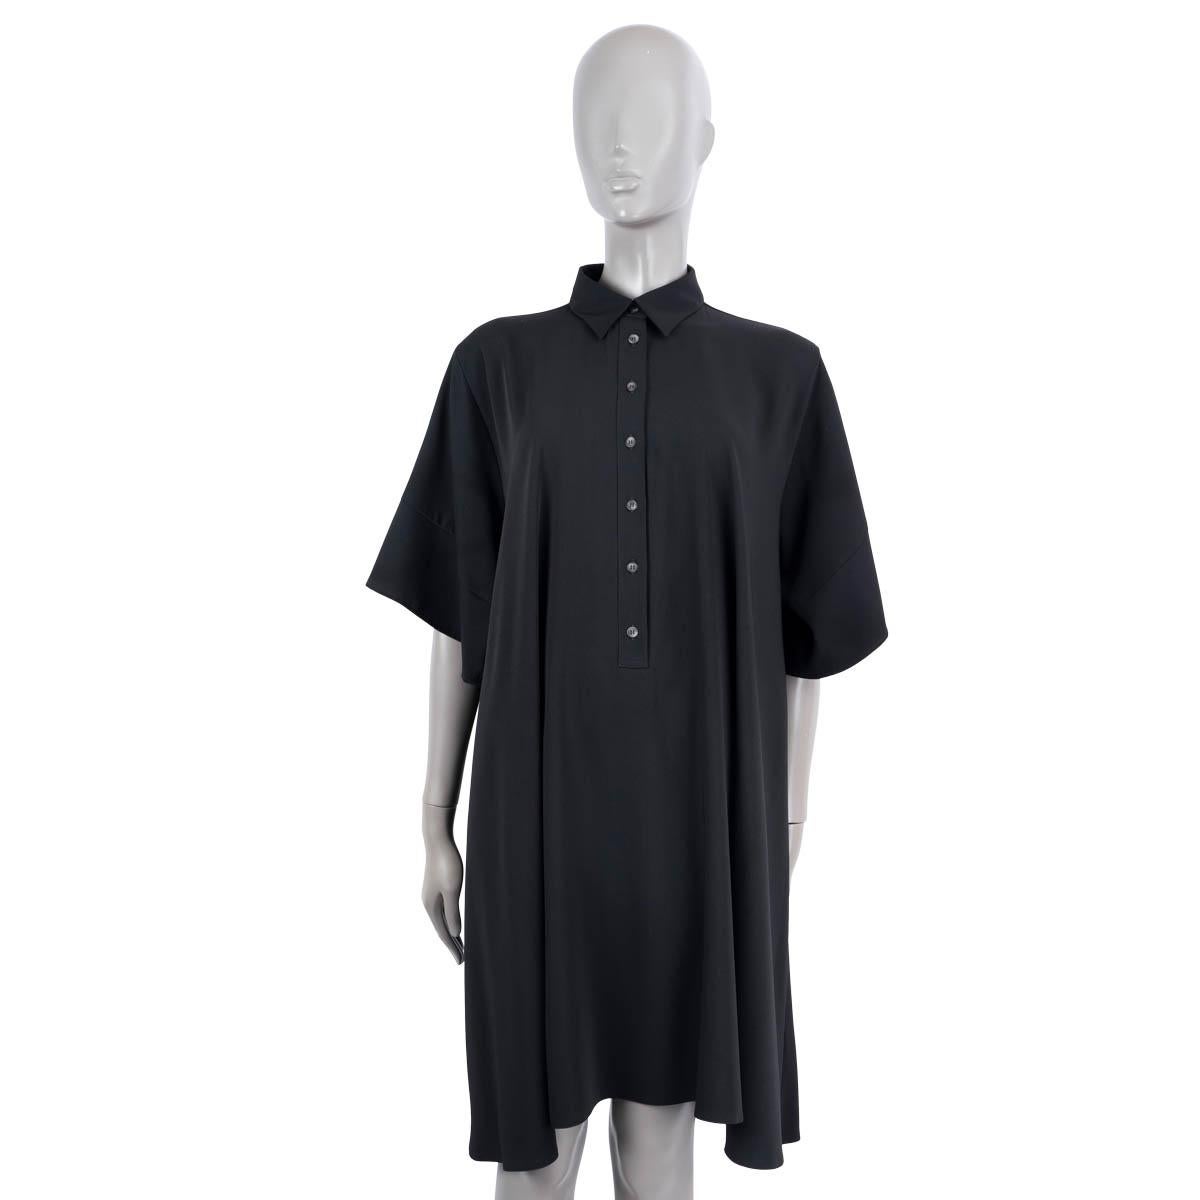 Black MM6 MARTIN MARGIELA black polyester SHORT SLEEVE SHIRT Dress 46 XL For Sale